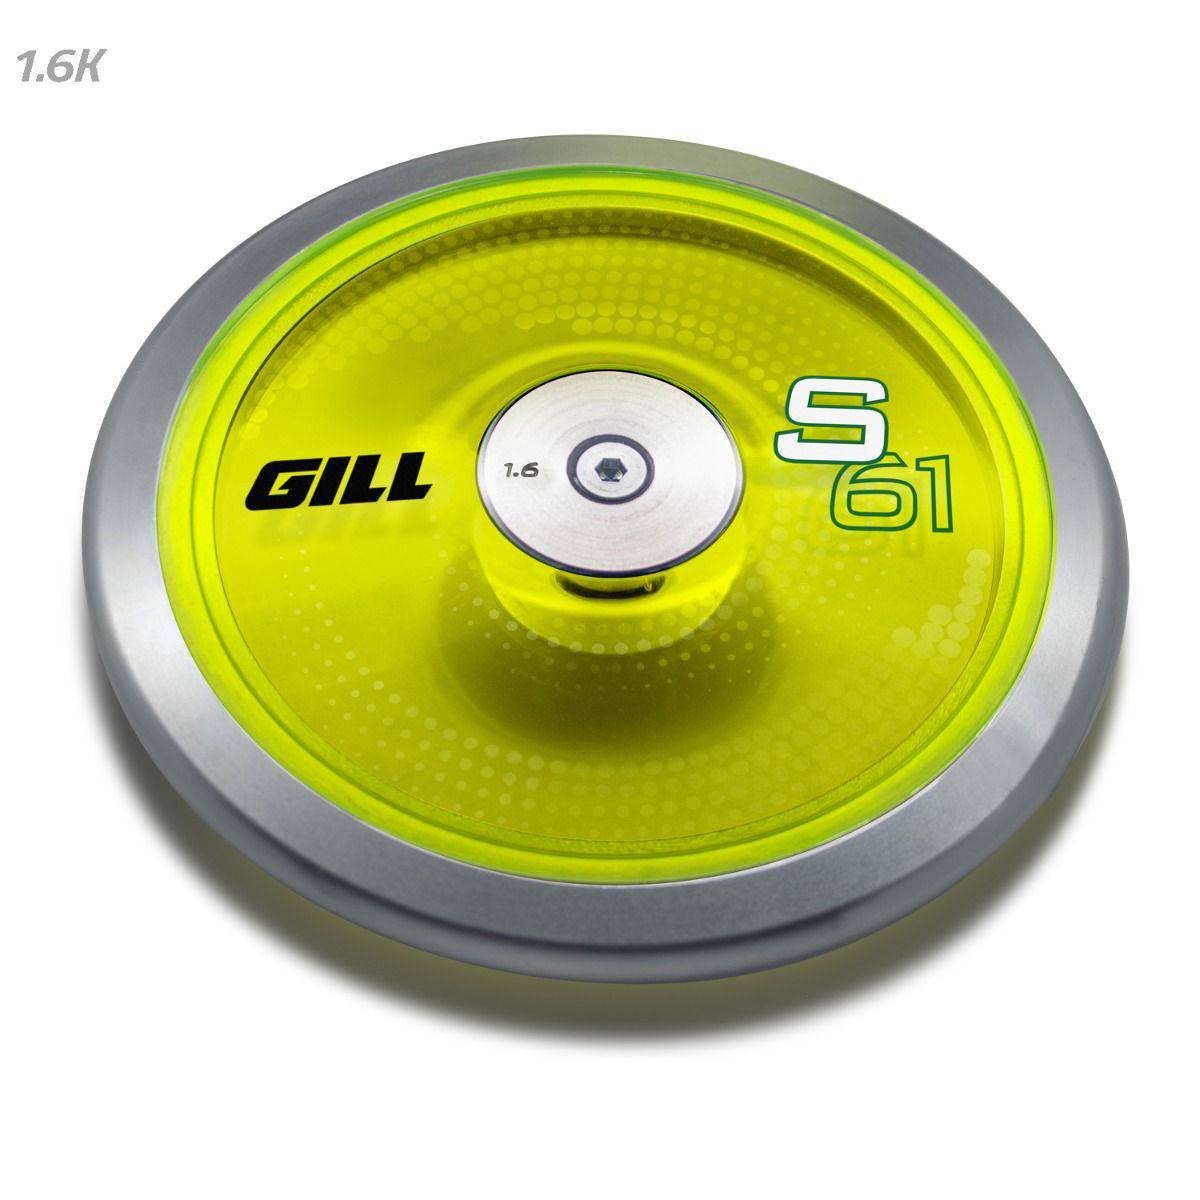 Gill Athletics 1.6K S61 Yellow Discus